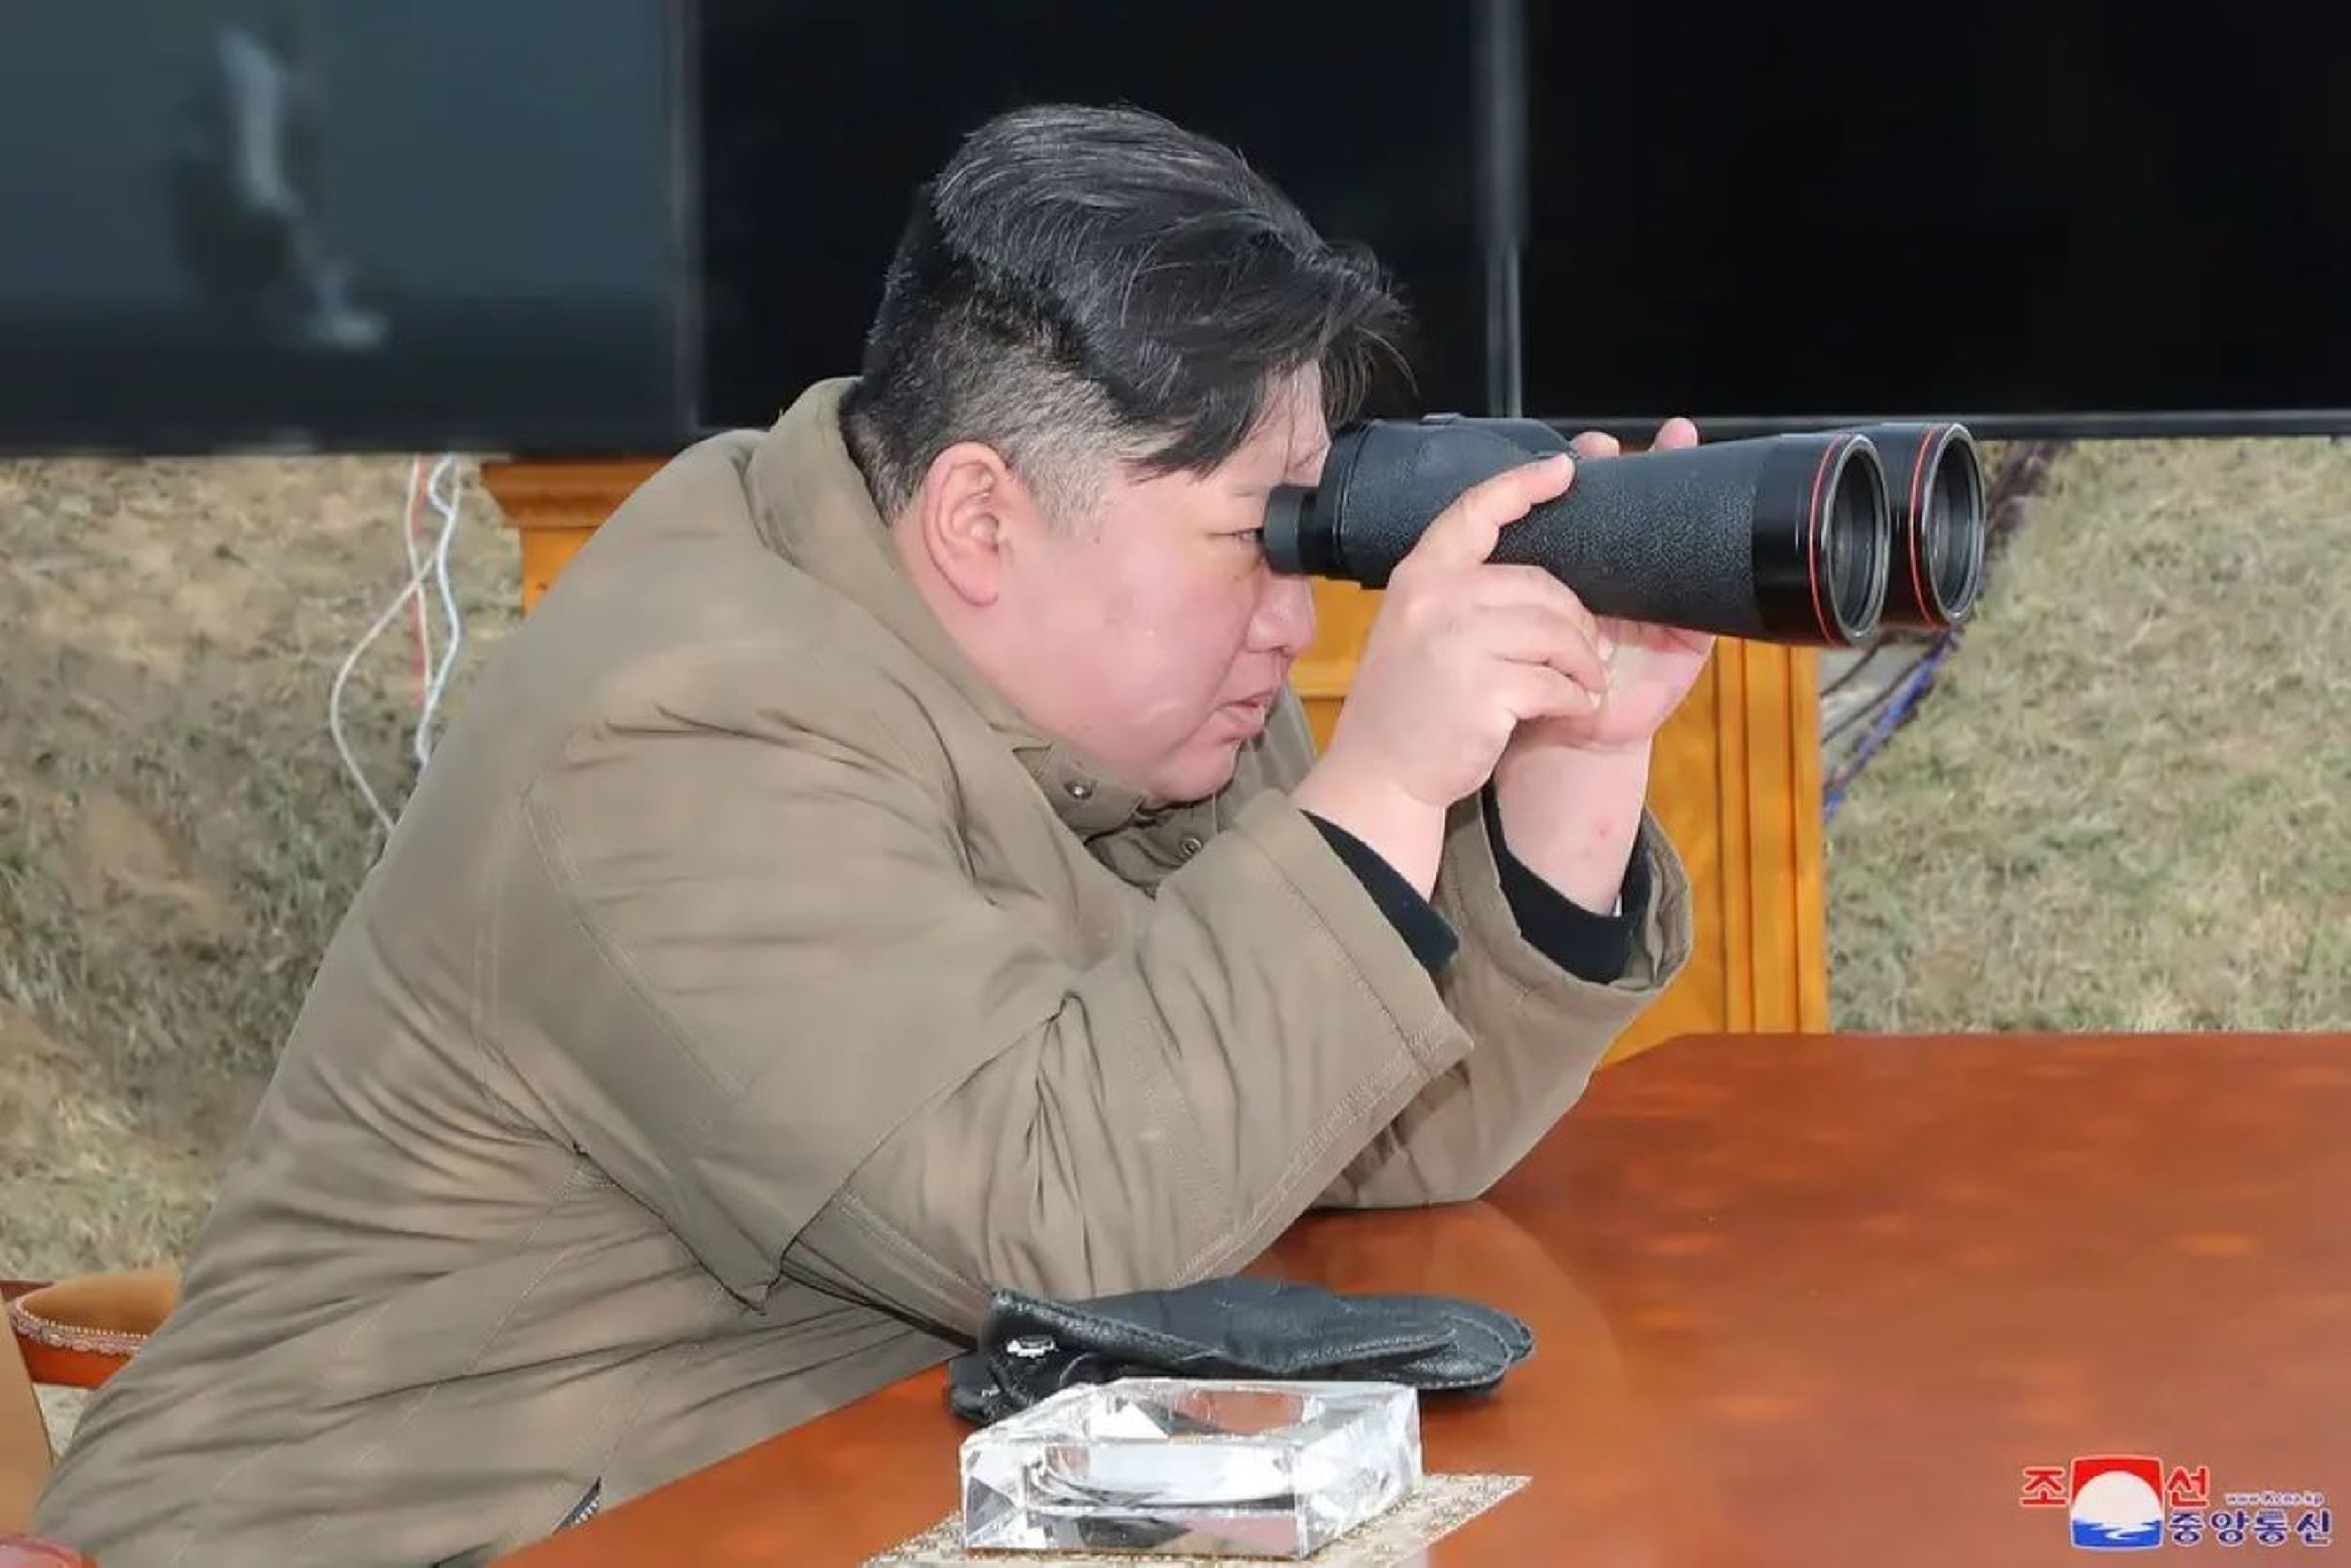 Kim Jong Un, líder de Corea del Norte